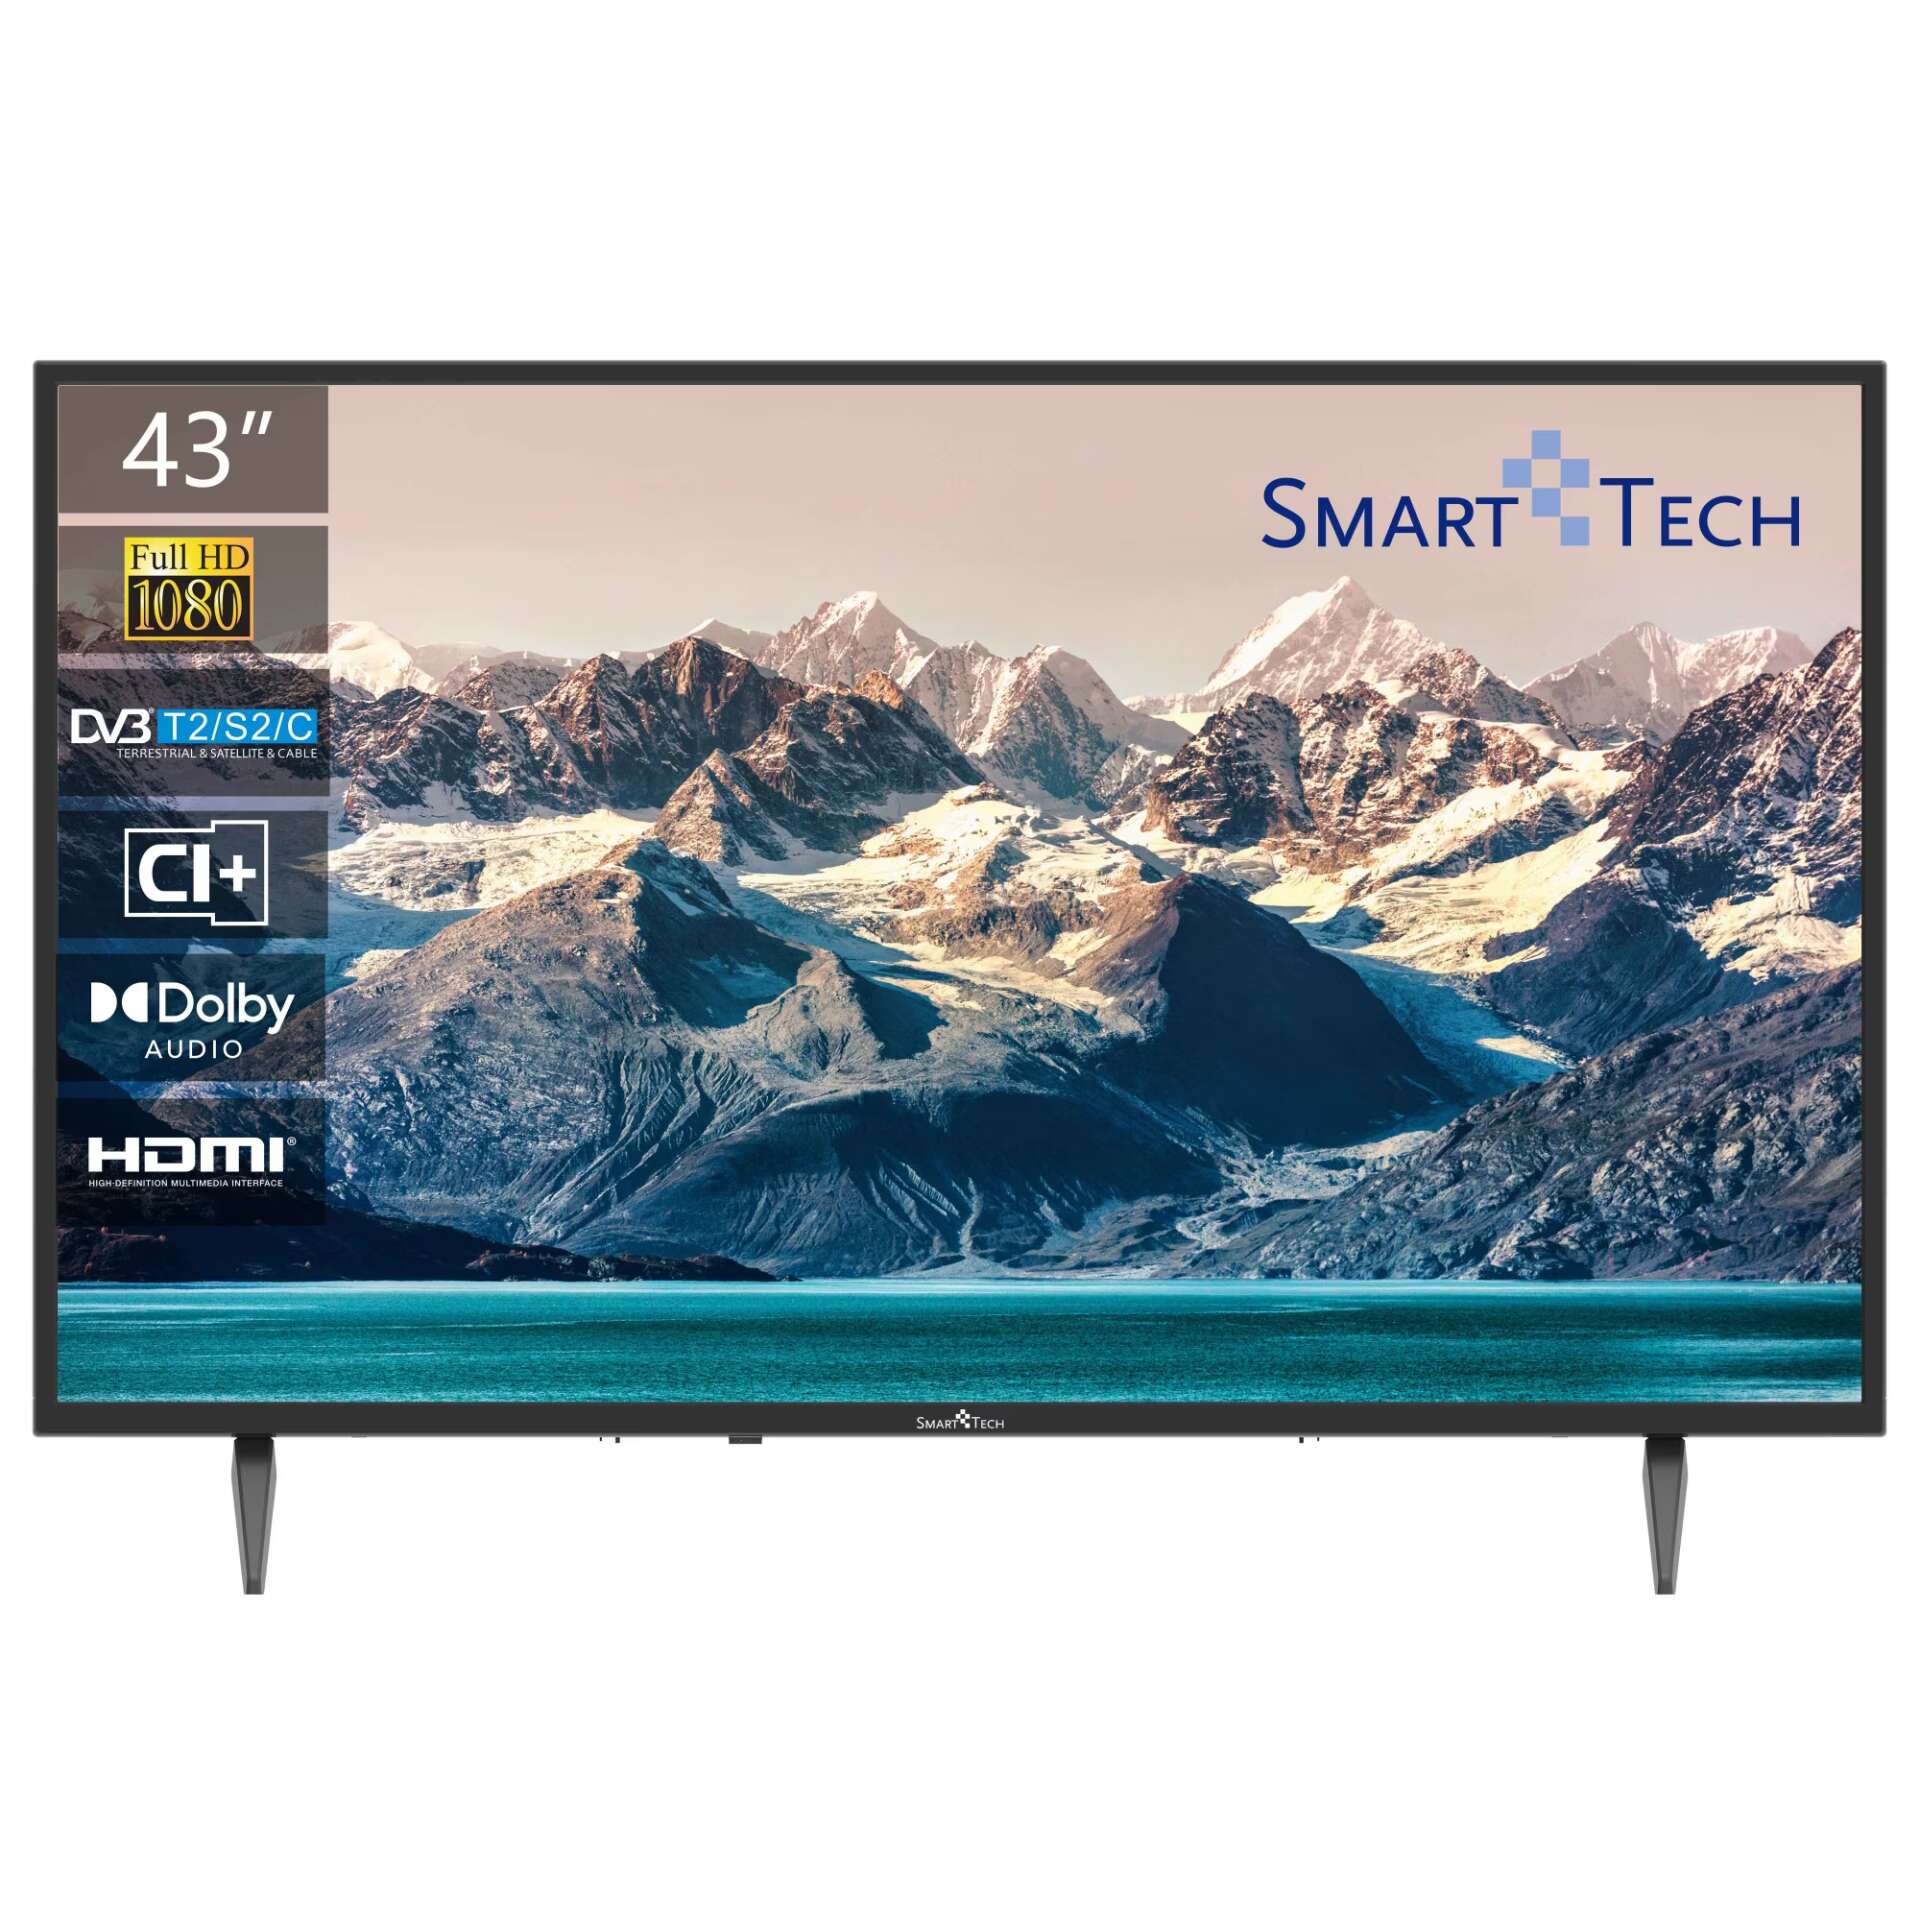 Smart tech smarttech 43" 43fn10t2 full hd tv